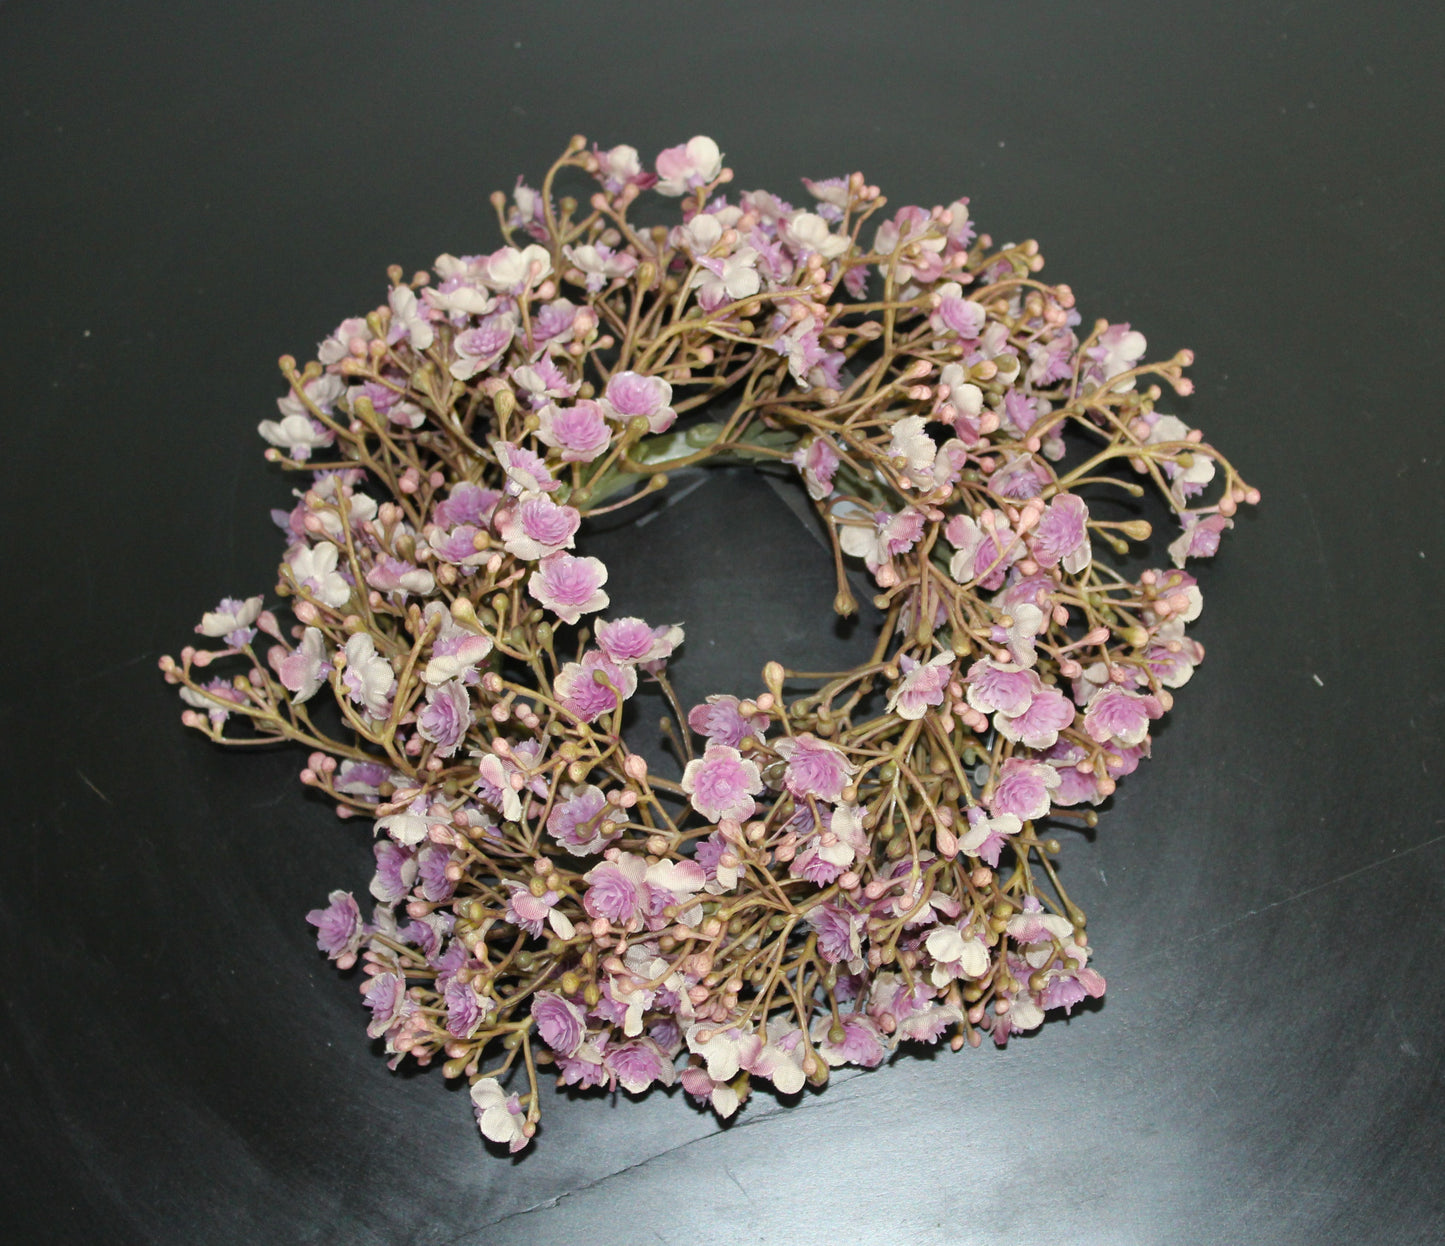 Deko Florale - 2 stk. kunstige kranse Gypso (brudeslør), lys lilla farve Ø 20 cm